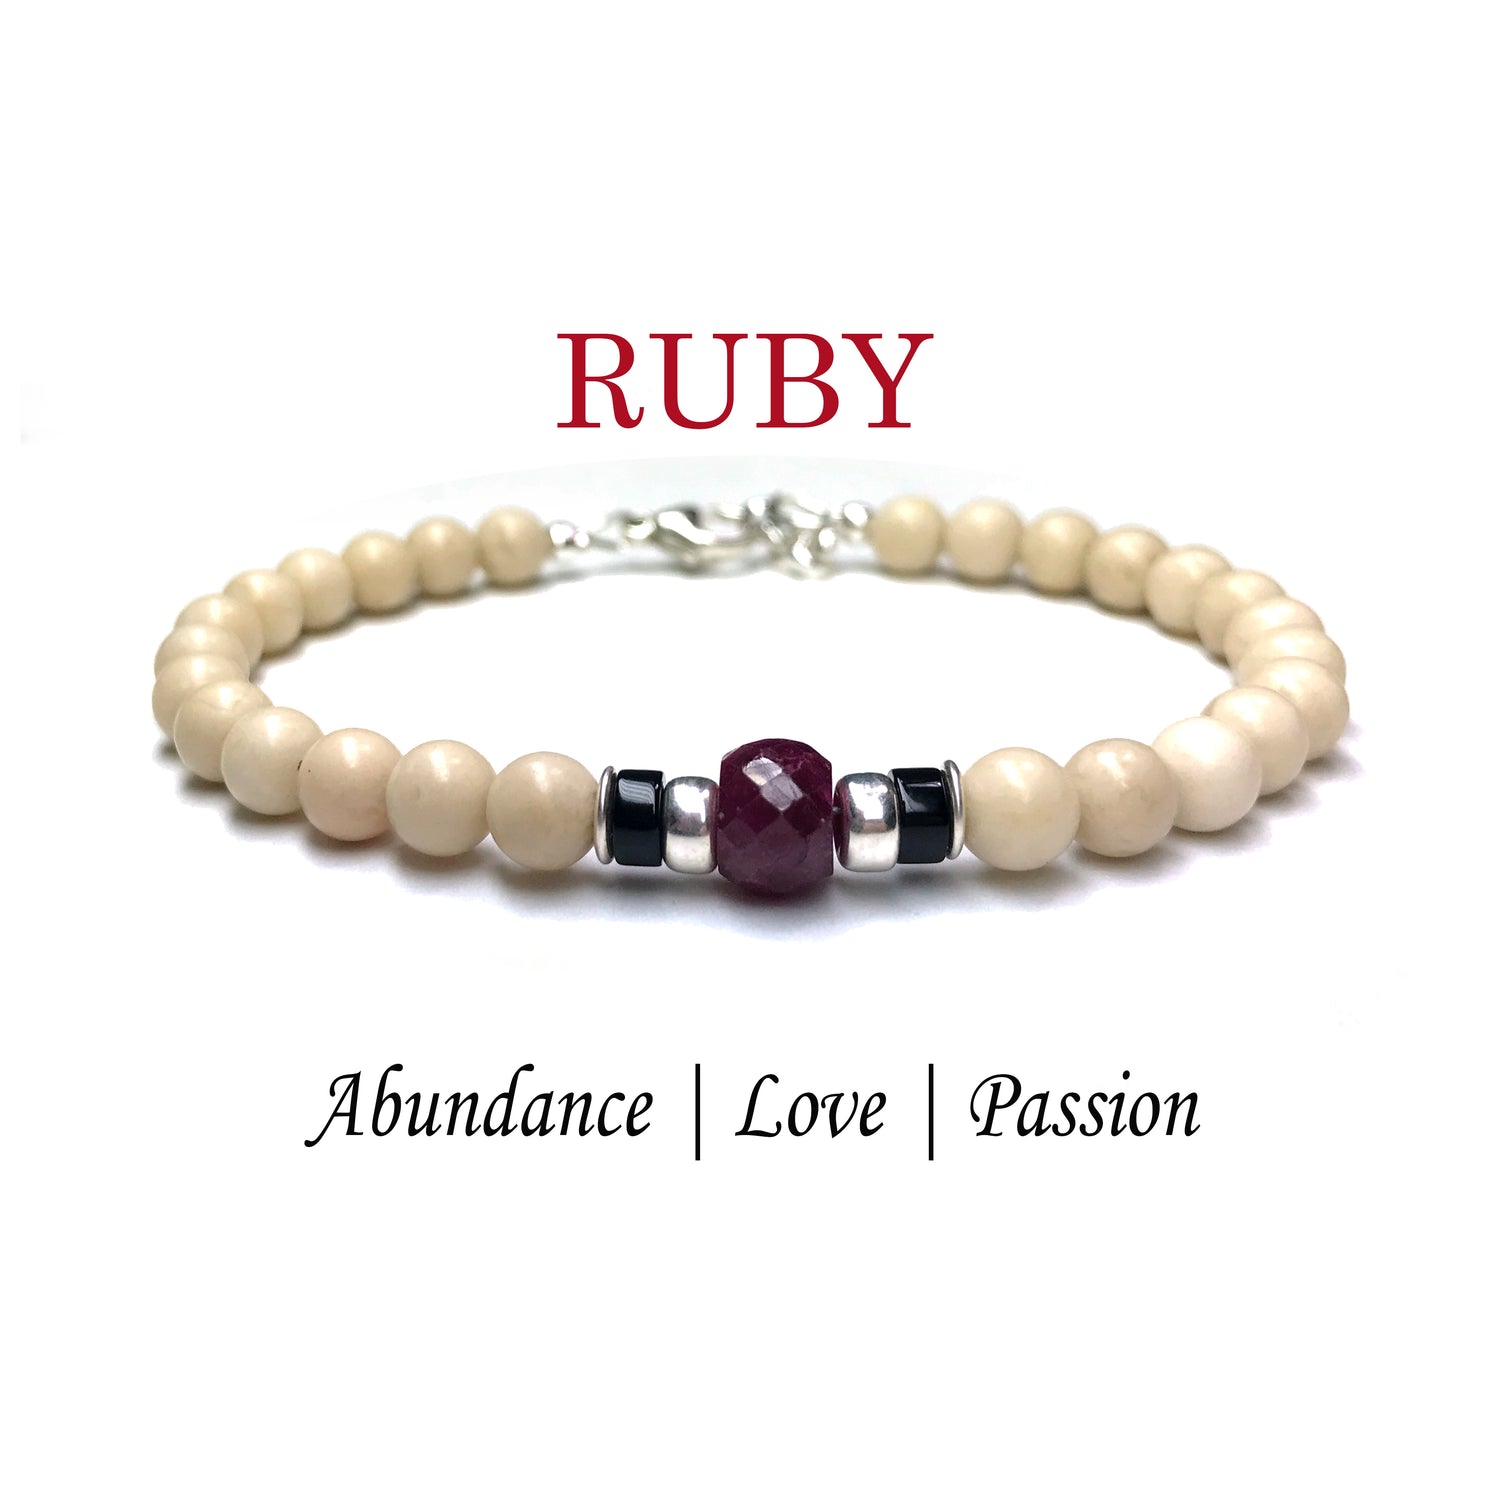 Faceted Red Ruby Mens Birthstone Bracelet, July Birthstone Jewelry, Cancer Zodiac Bracelet, 6MM Gemstone Beaded Black Onyx Birthday Gift